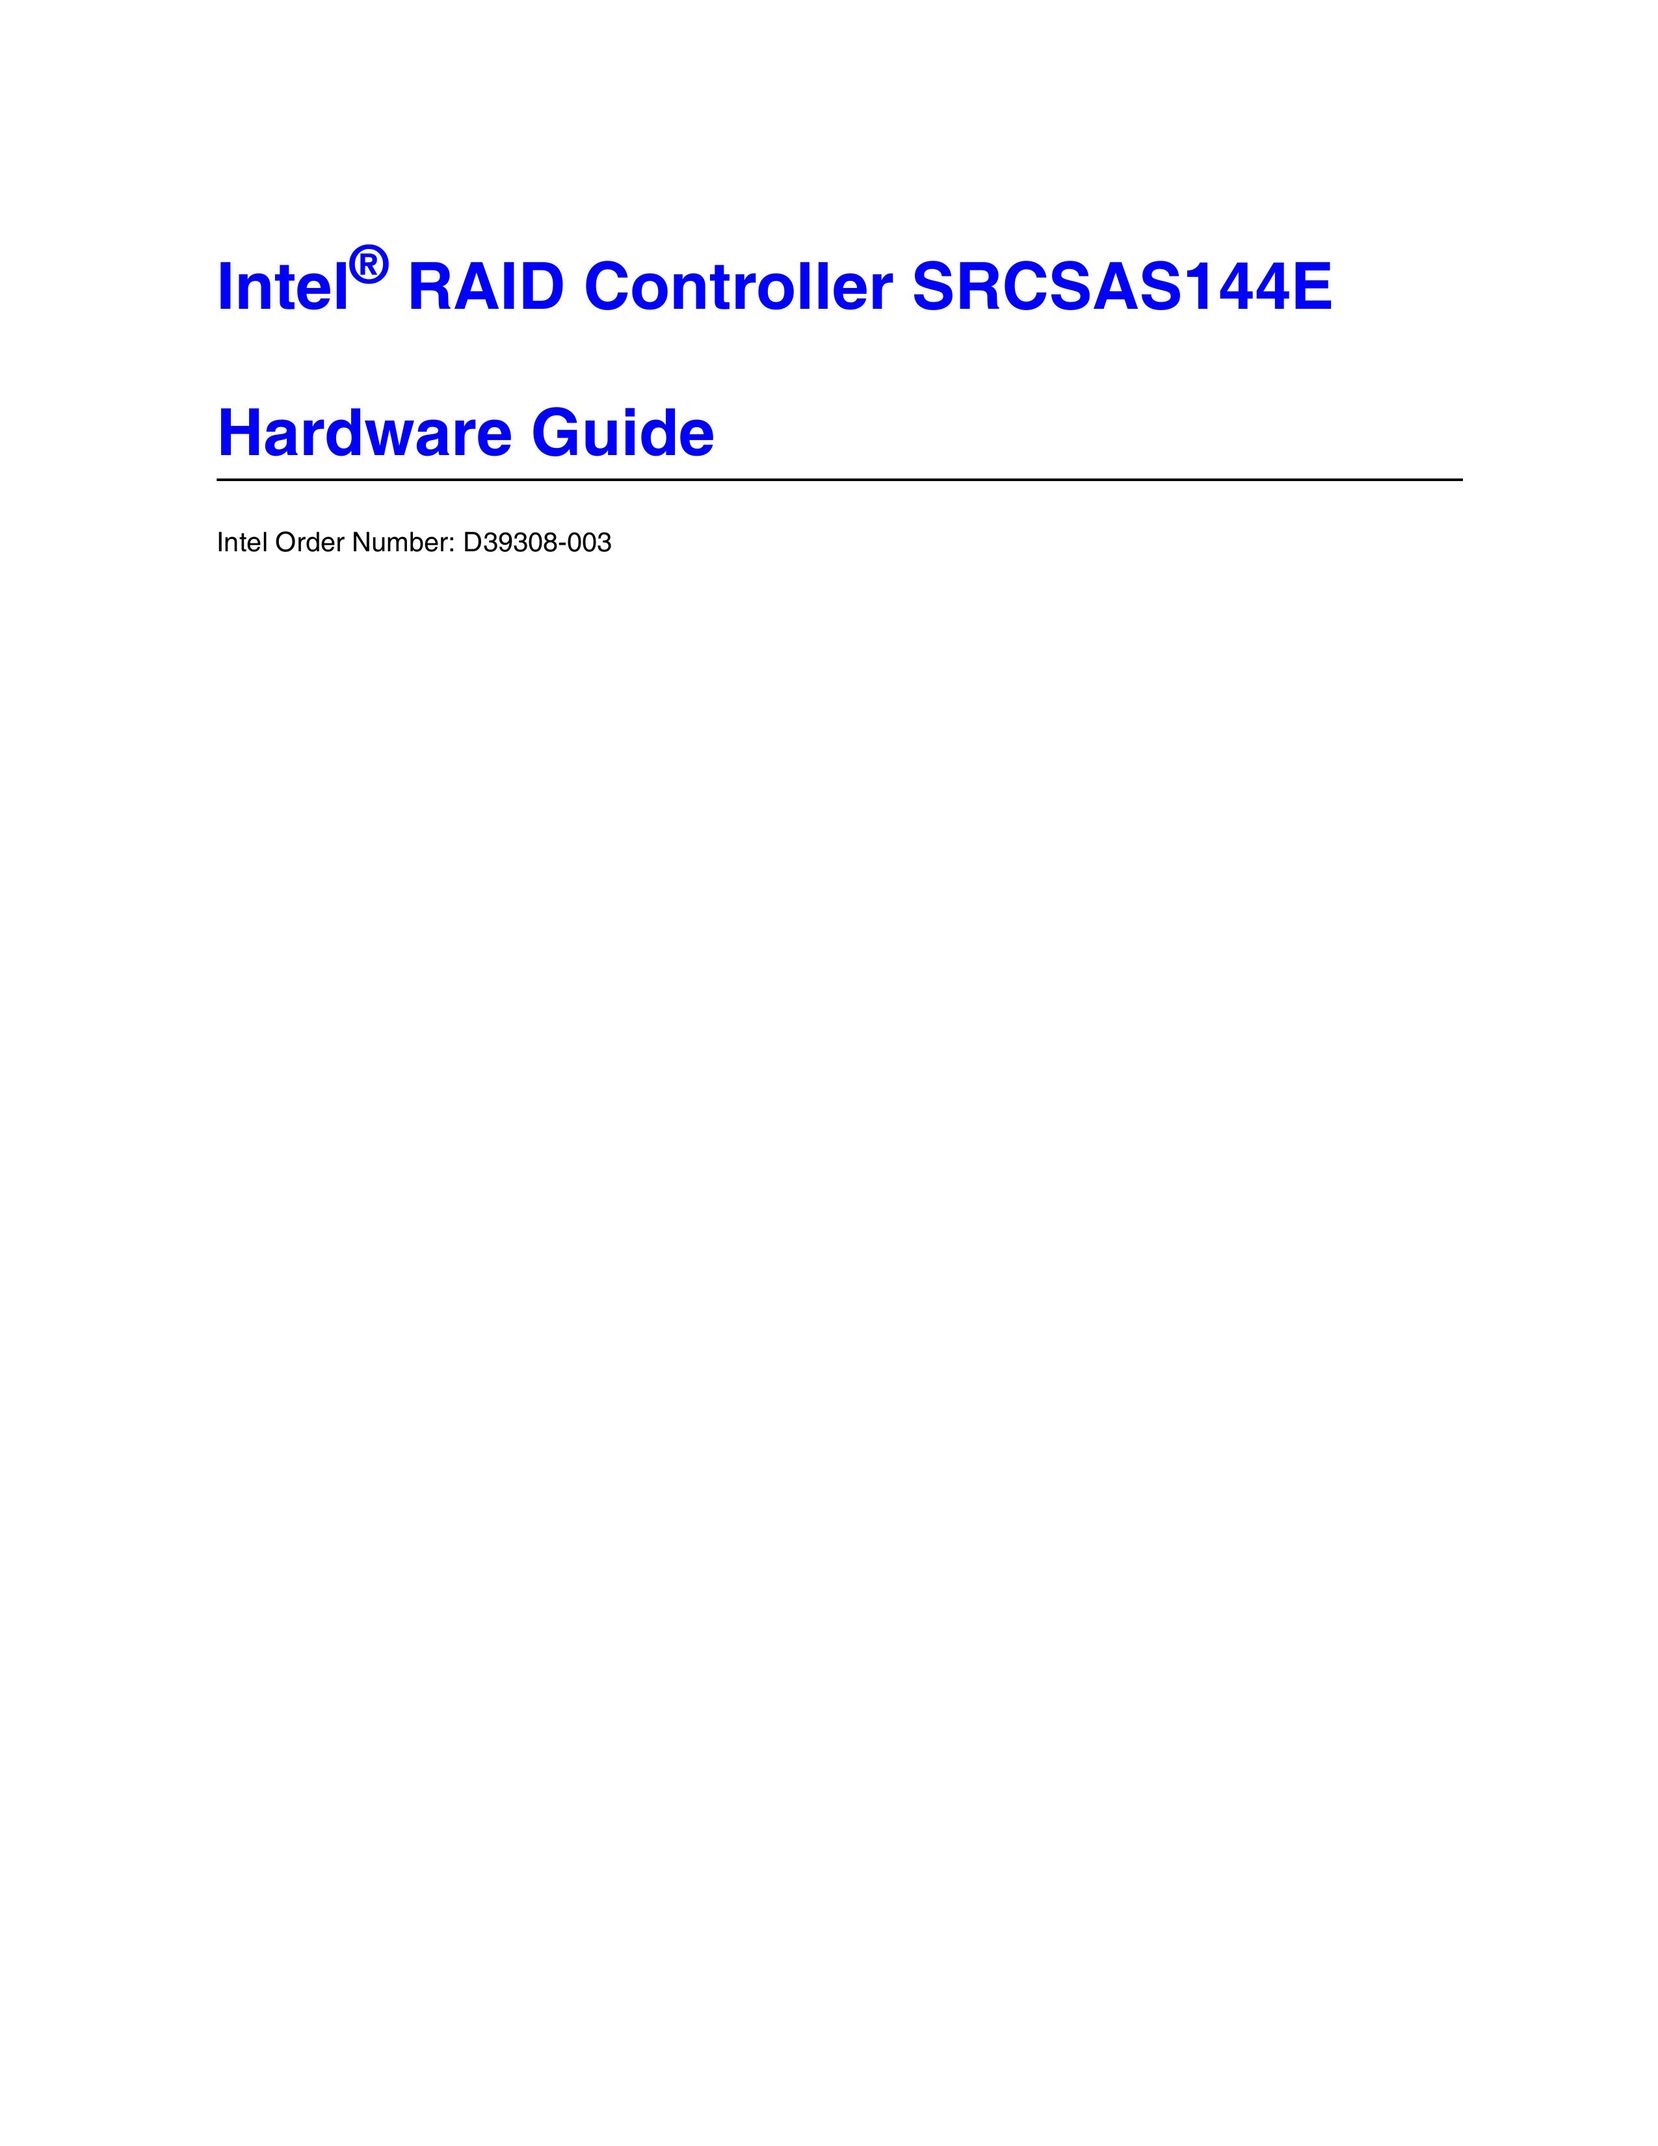 Intel srcsas144e Saw User Manual